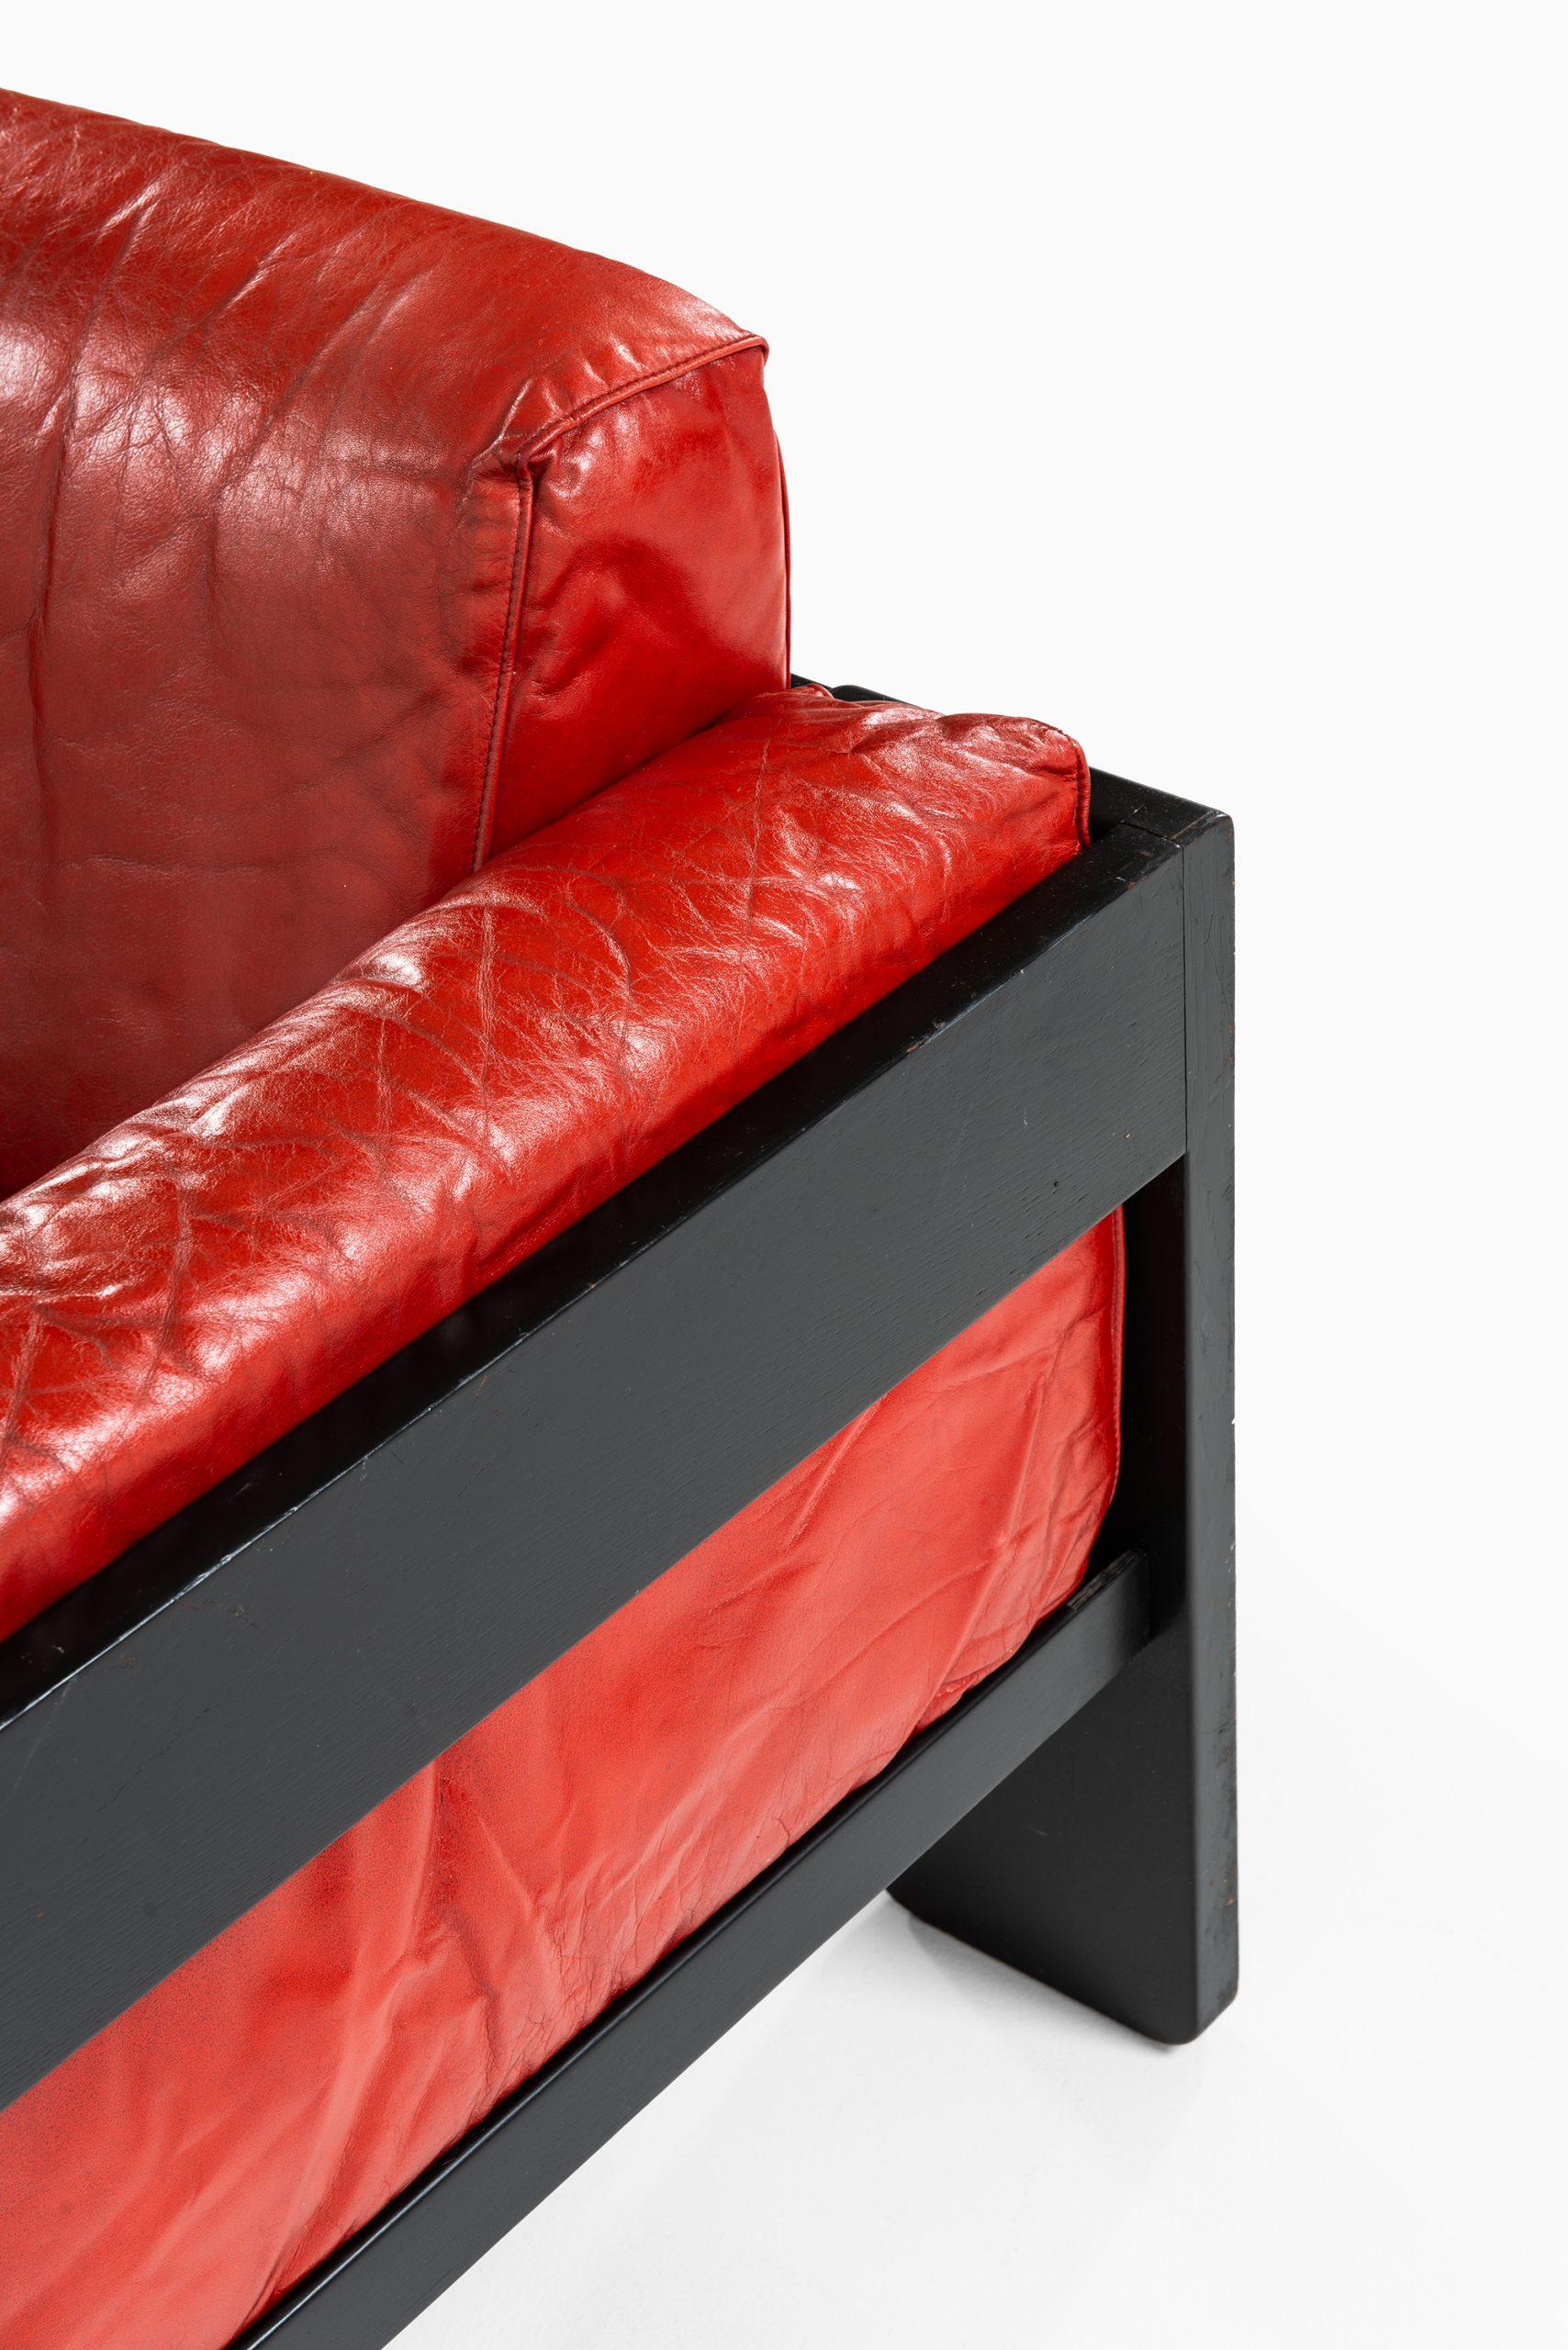 Tobia Scarpa Sofa Model Bastiano Produced by Haimi in Finland For Sale 1